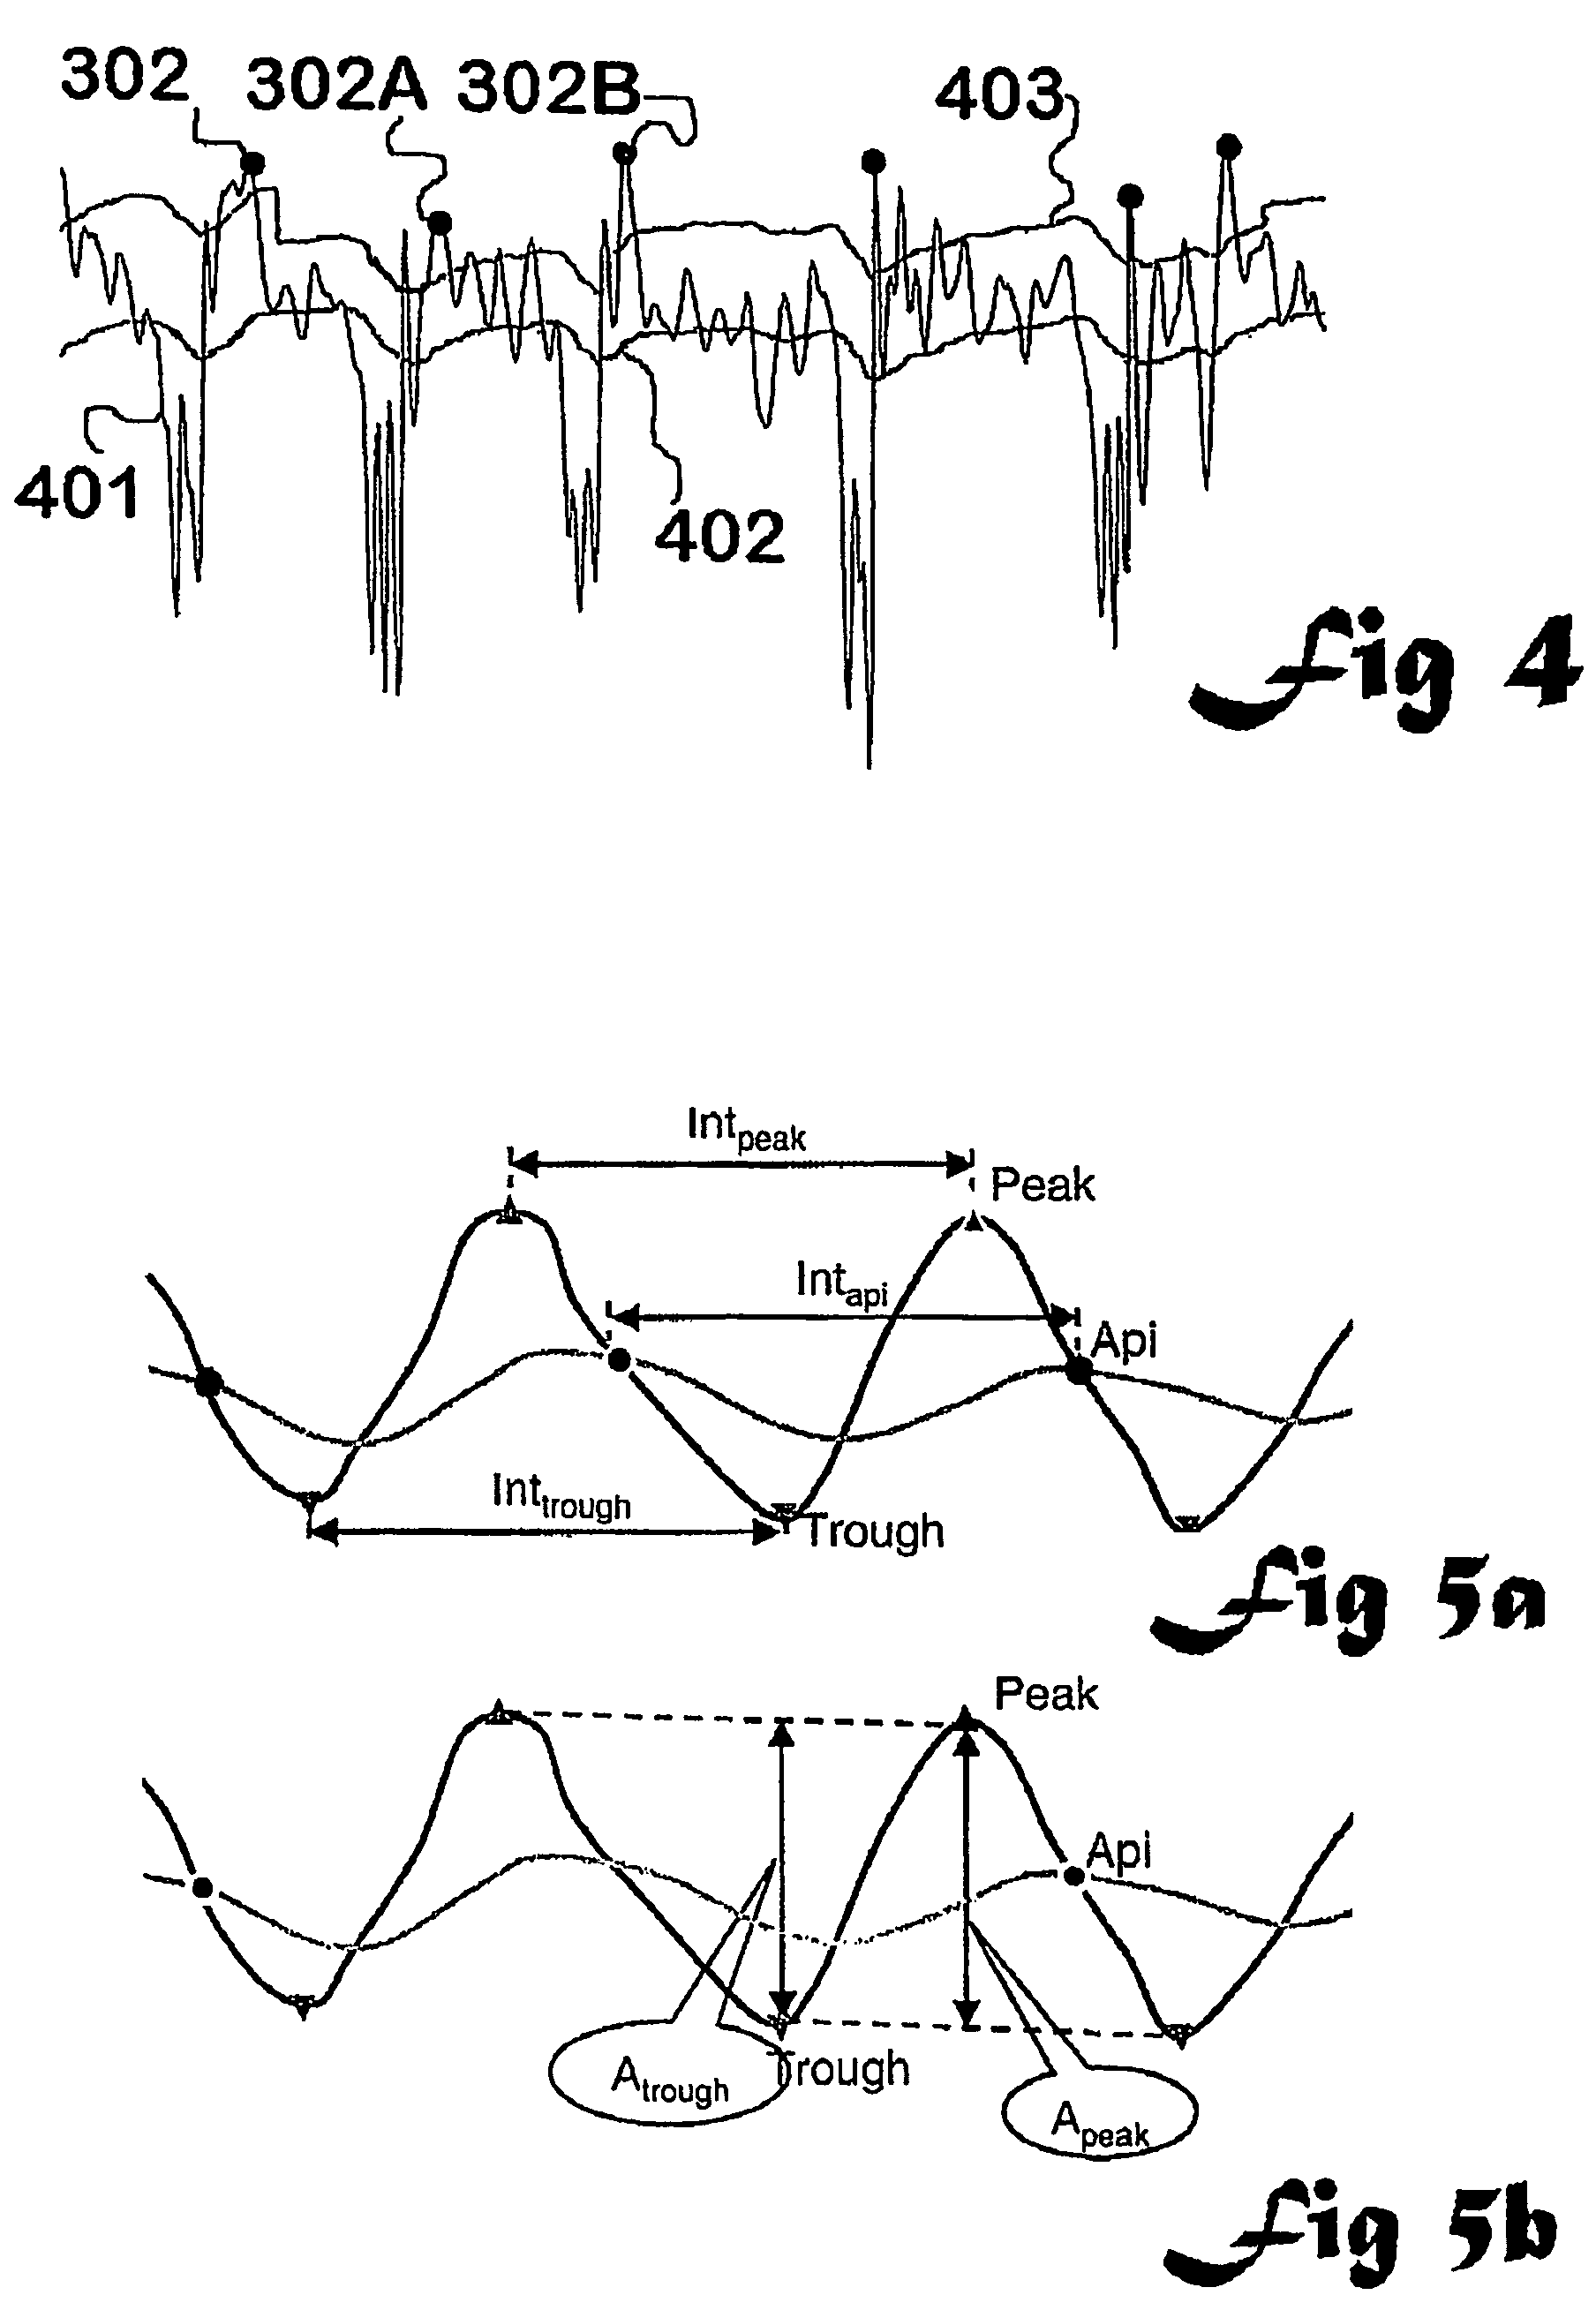 EEG seizure analysis